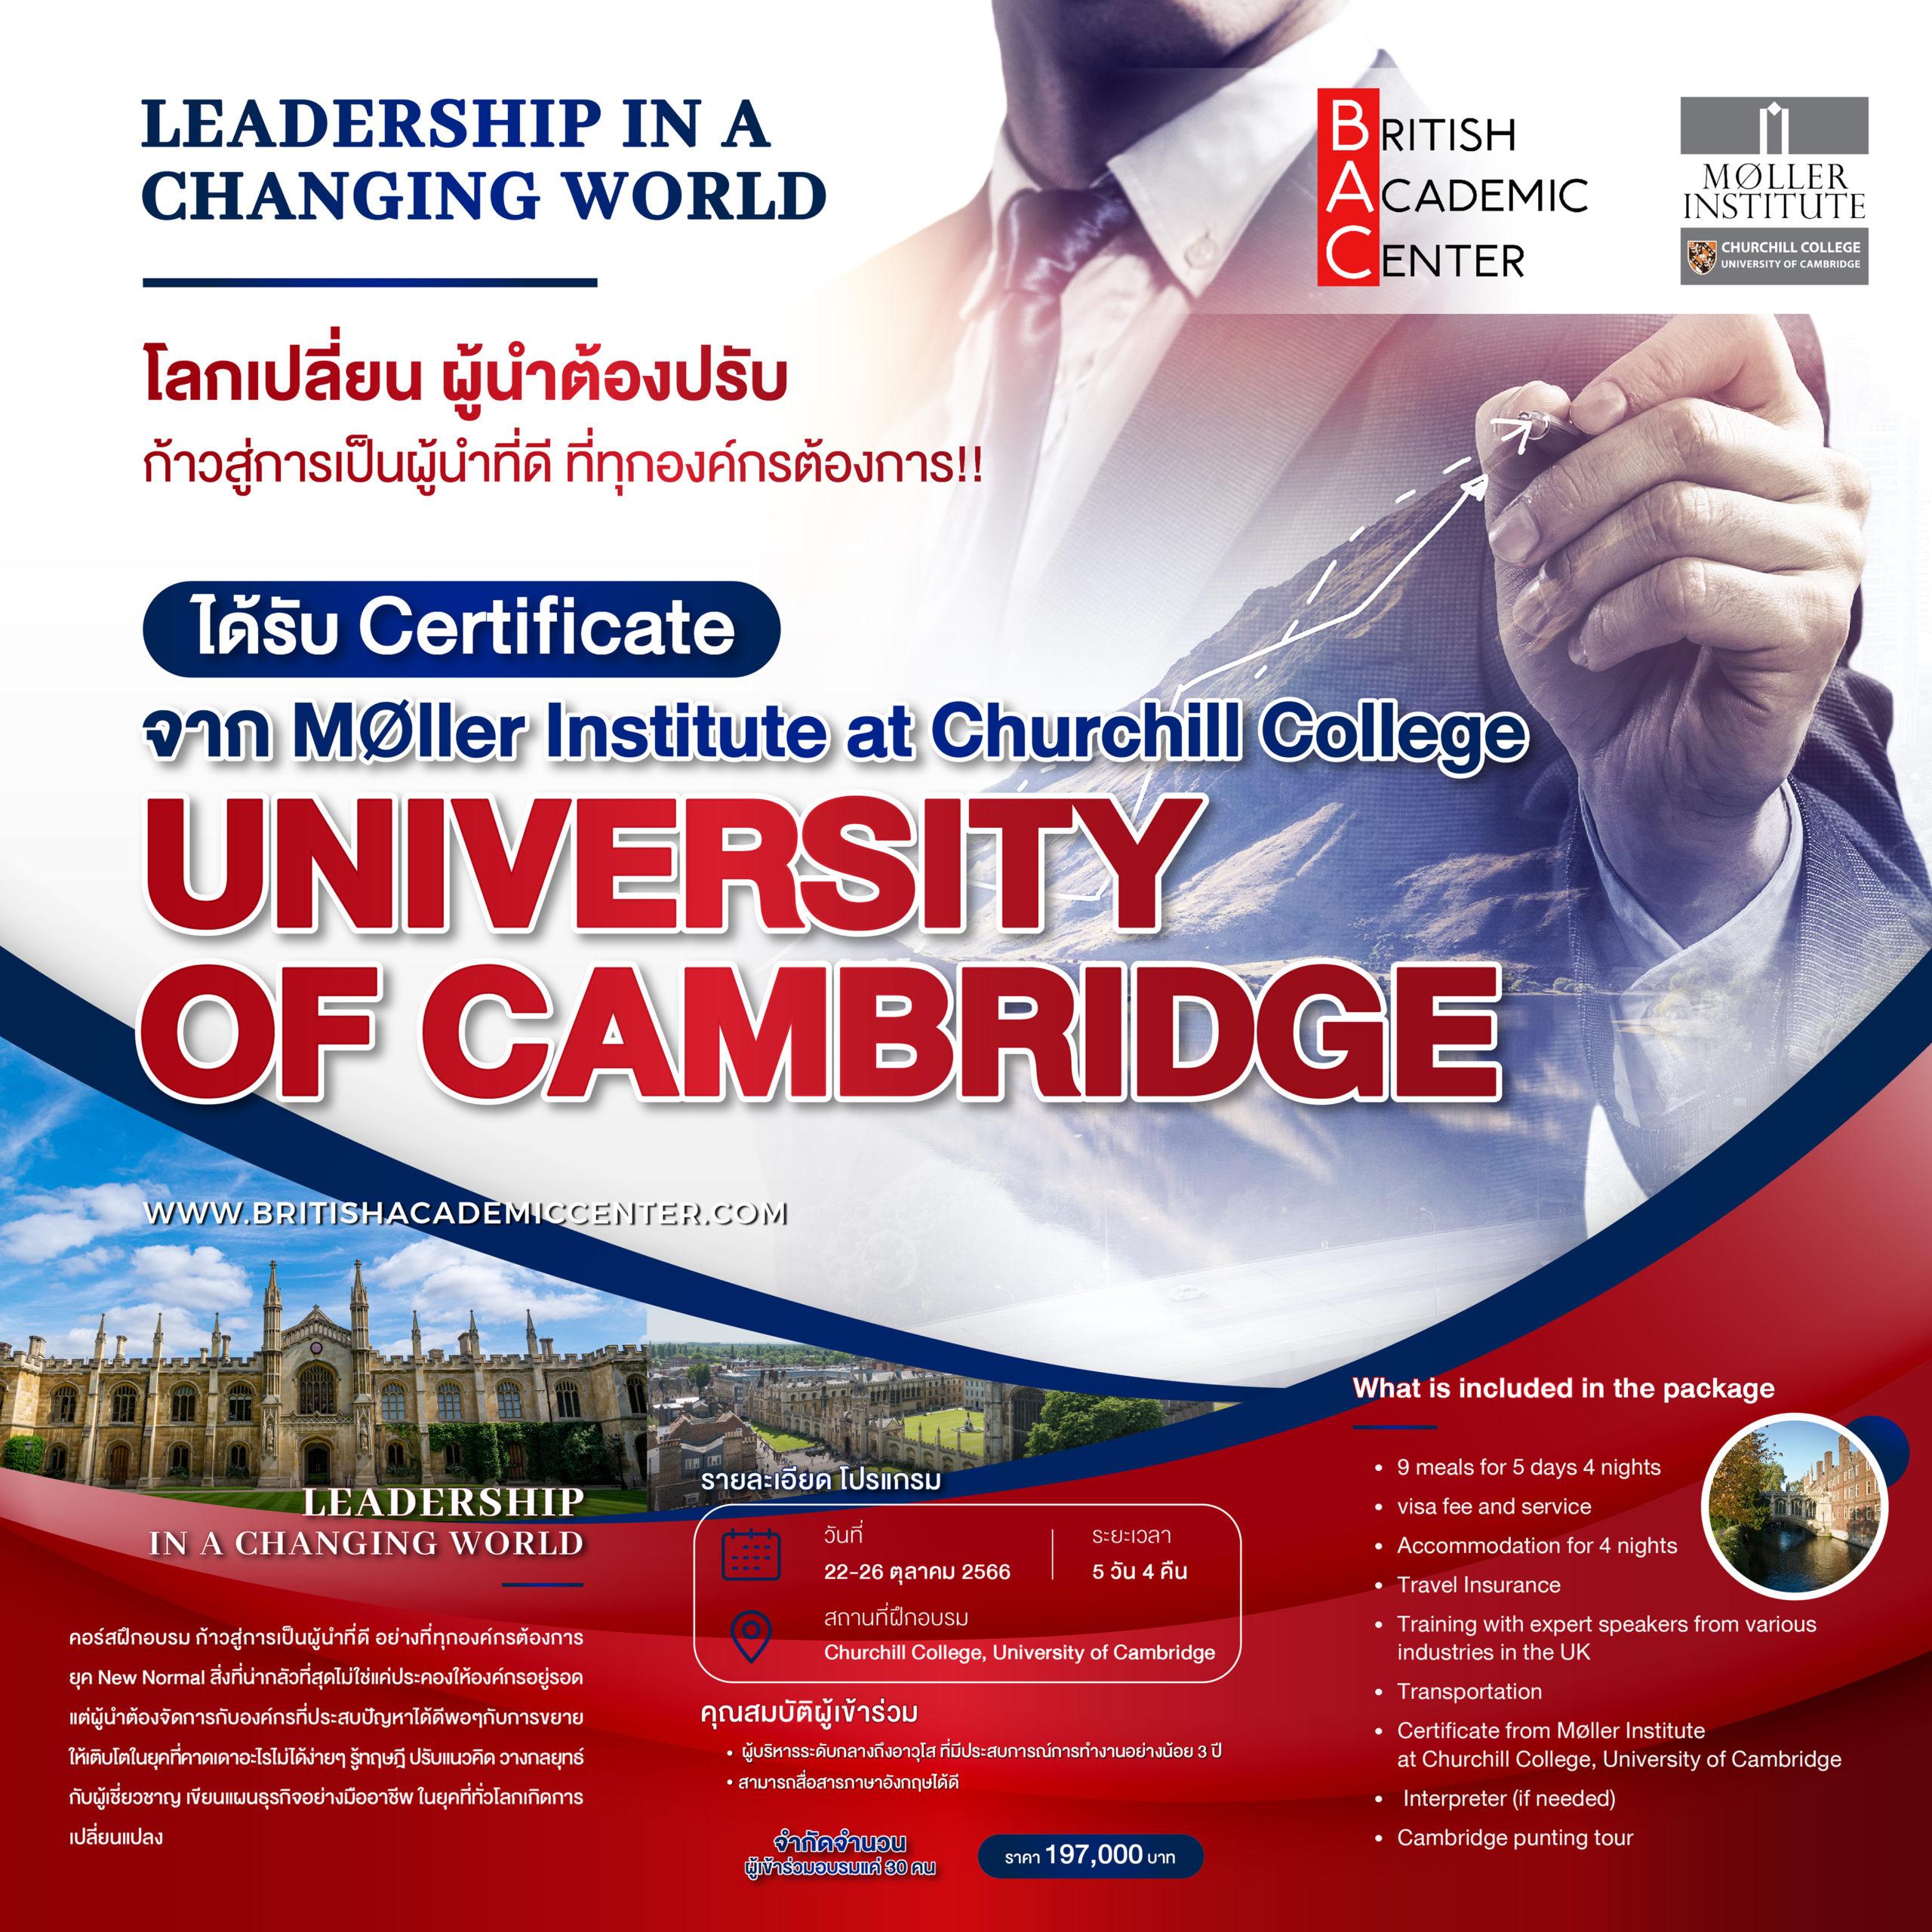 Professional Training course โลกเปลี่ยน ผู้นำต้องปรับ จัดทำโดย Møller Institute Churchill ของ The University of Cambridge